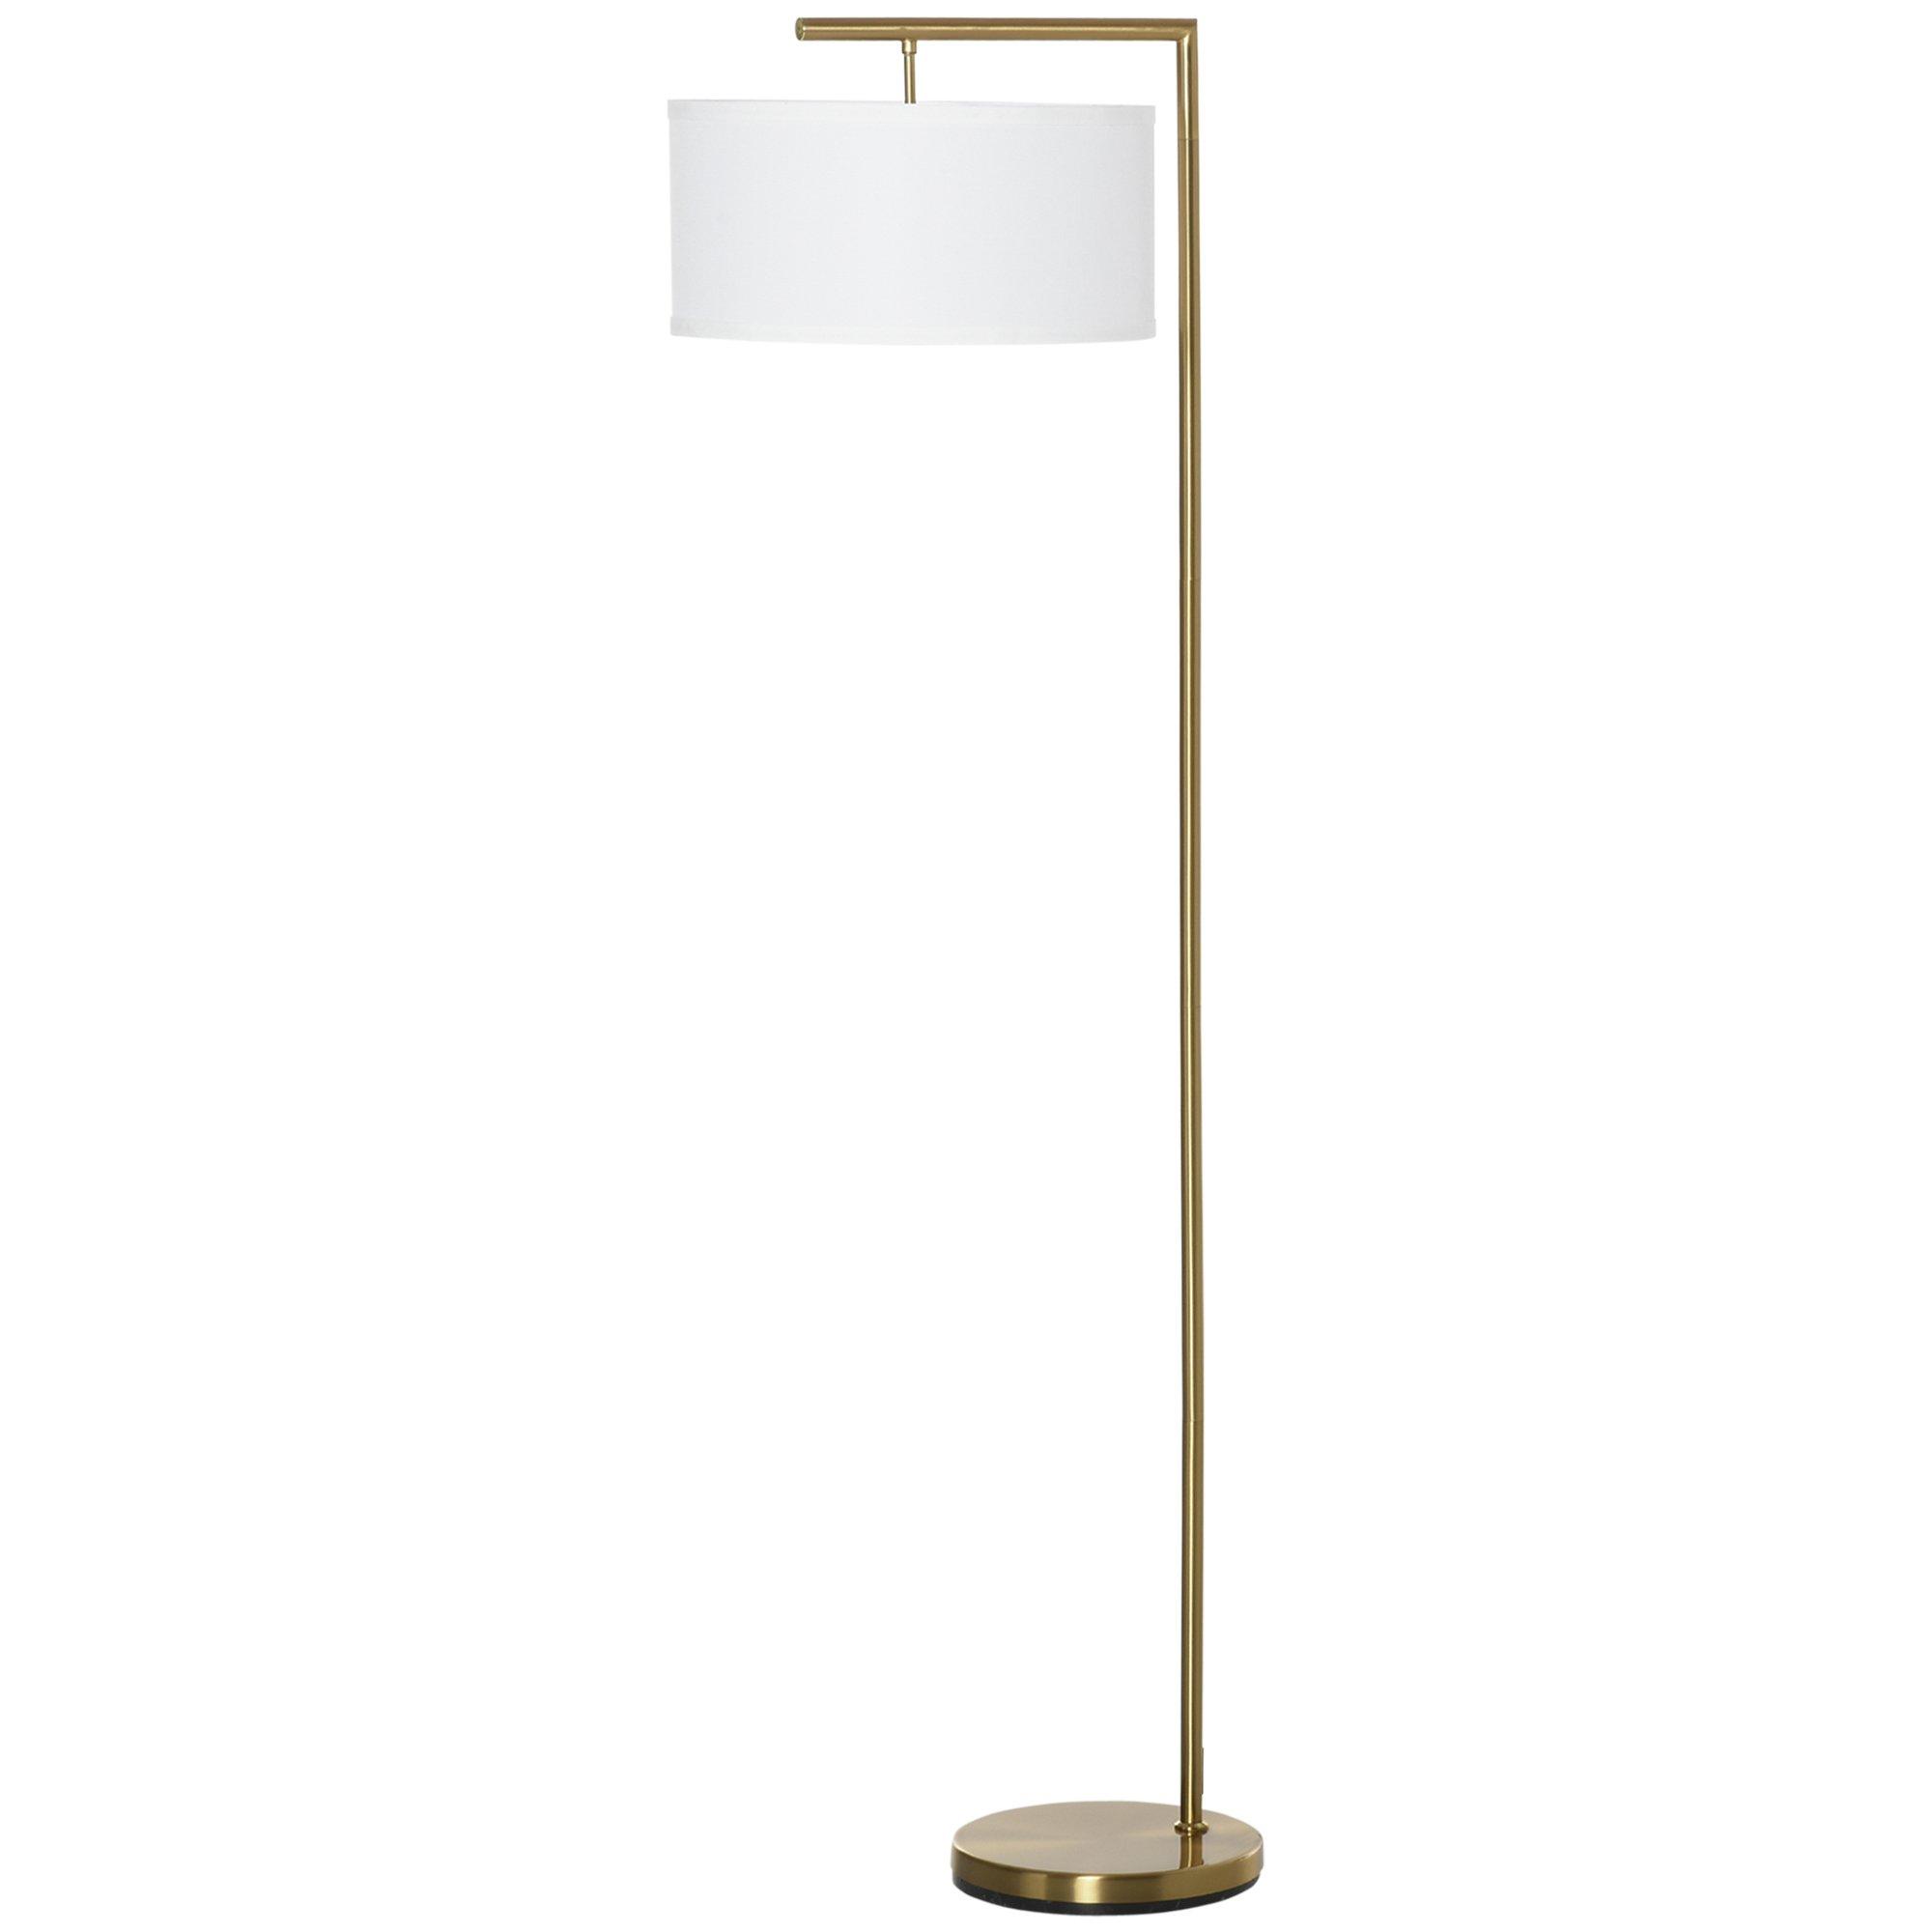 Modern Floor Lamp Tall Pole Light with Linen Shade E27 Holder